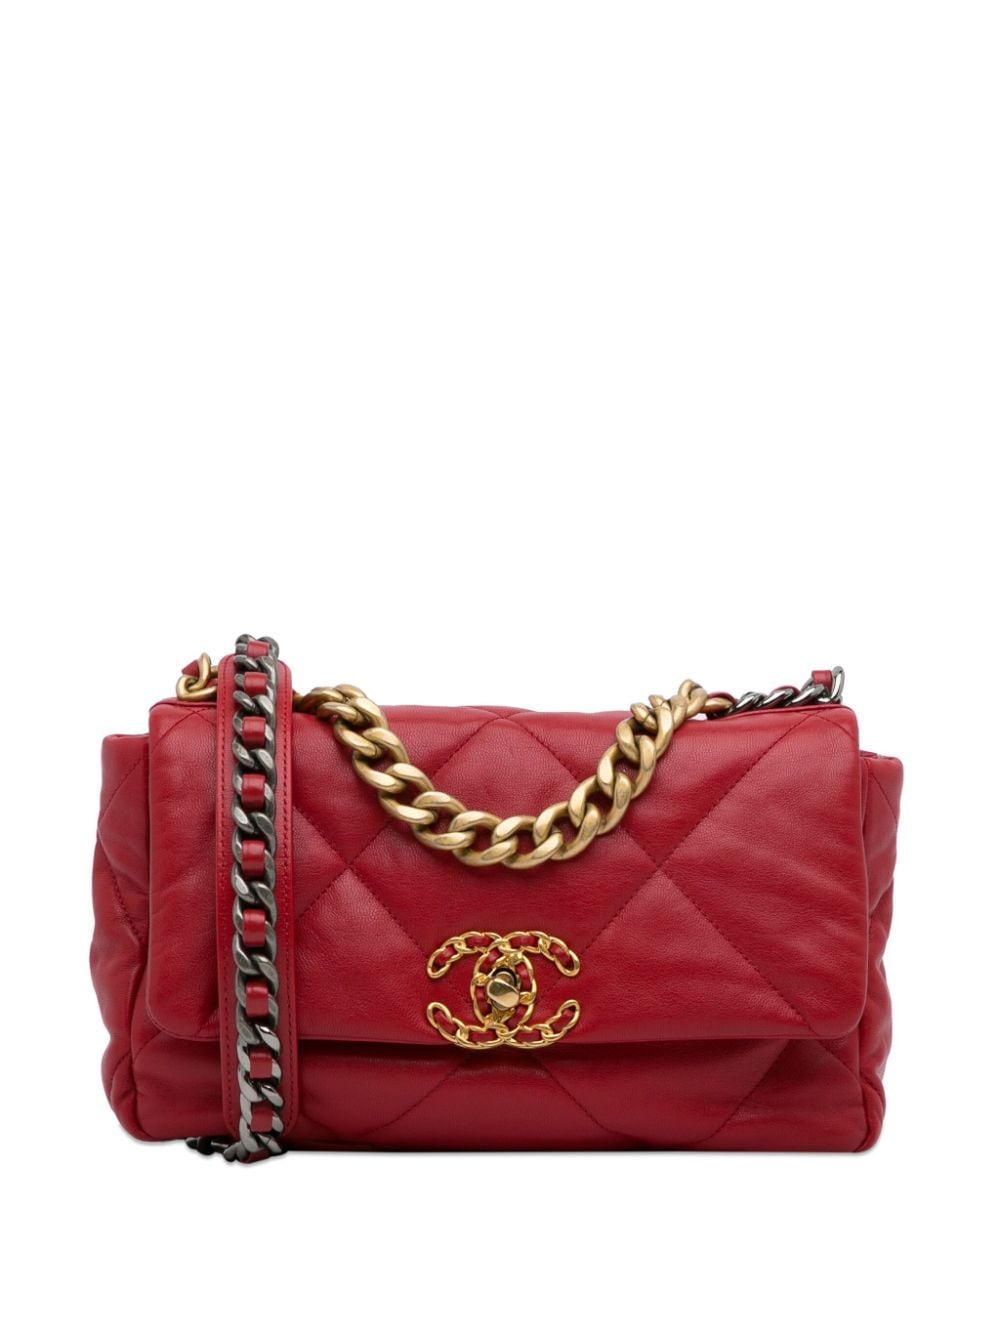 Pre-owned Chanel 2019 Medium Lambskin 19 Flap Bag Satchel In Red